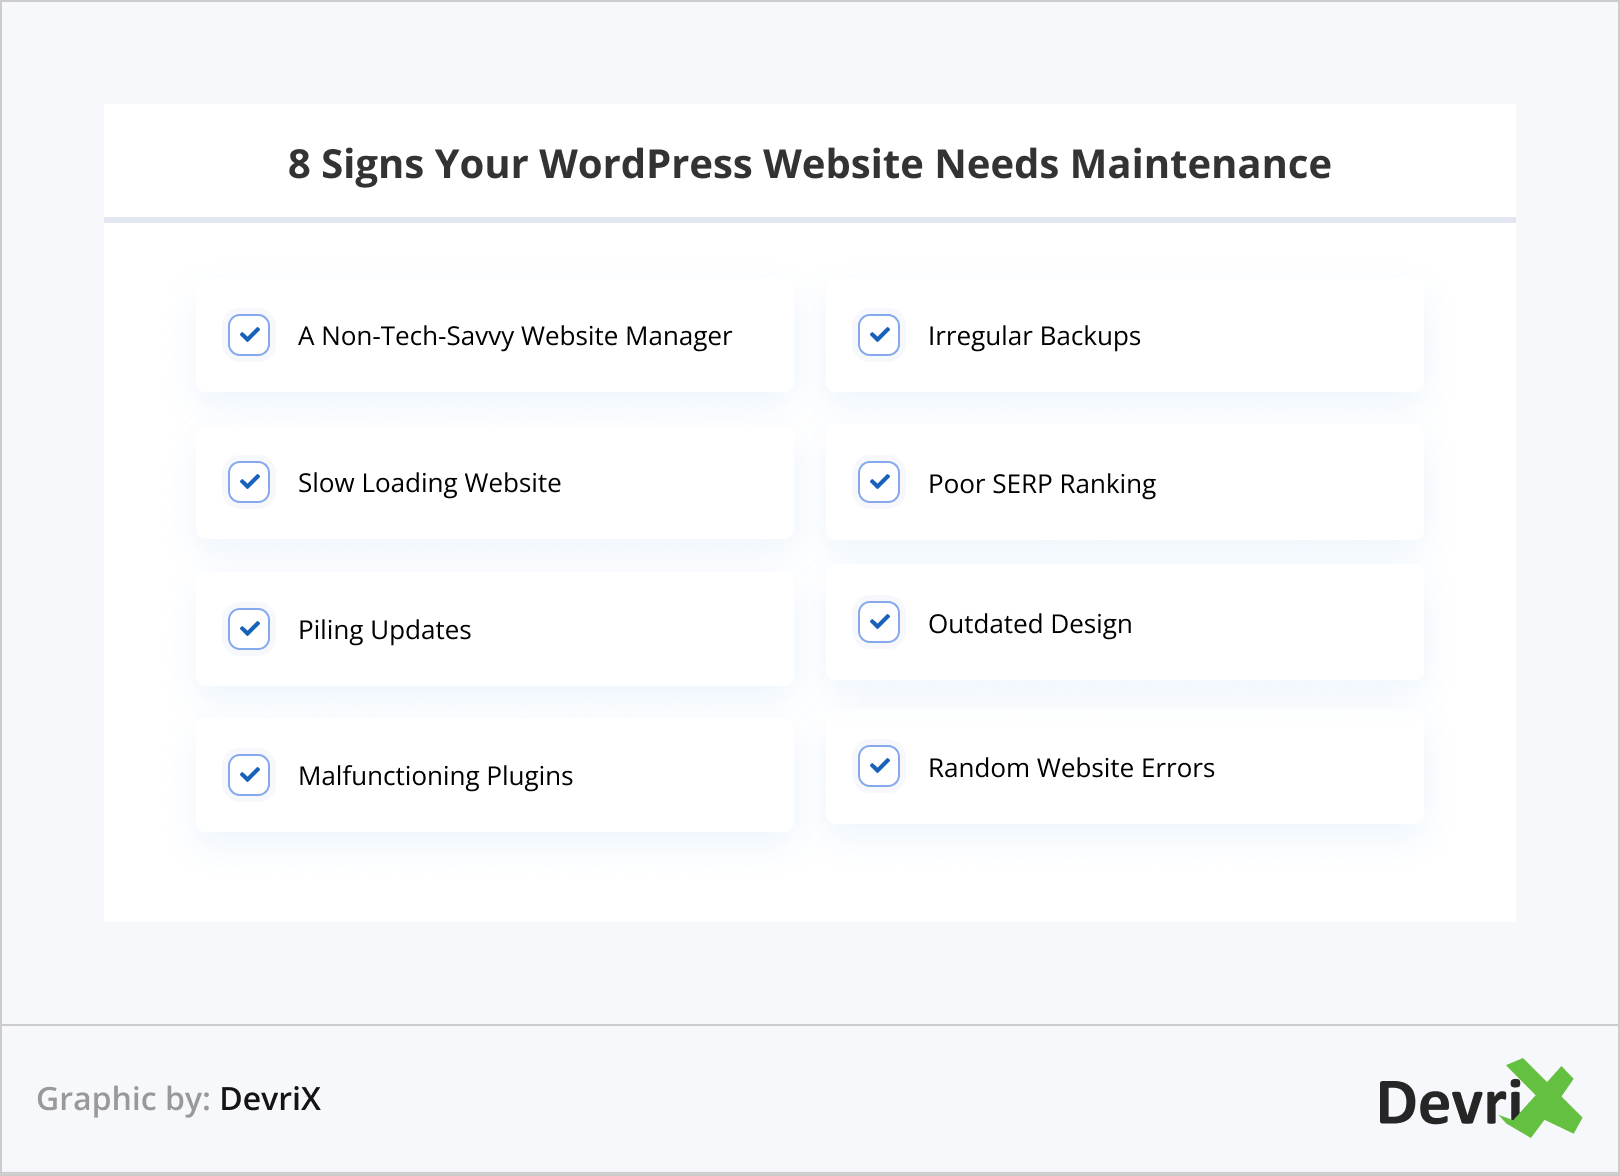 Signs Your WordPress Website Needs Maintenance